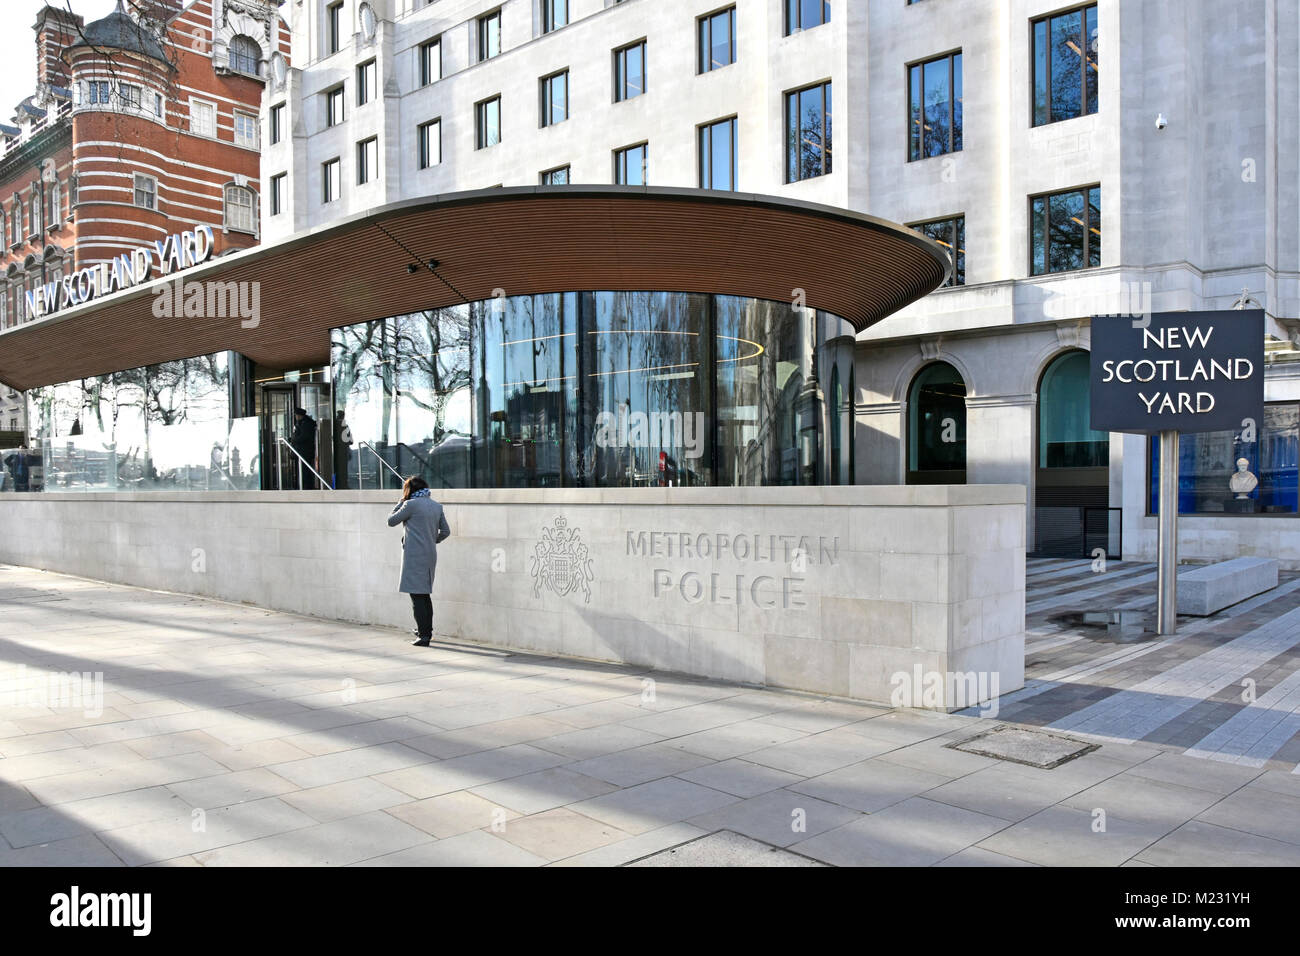 New Scotland Yard verlegt Metropolitan Police Headquarters in alten Curtis Green Building jetzt renoviert & Victoria Embankment London UK erweitert Stockfoto